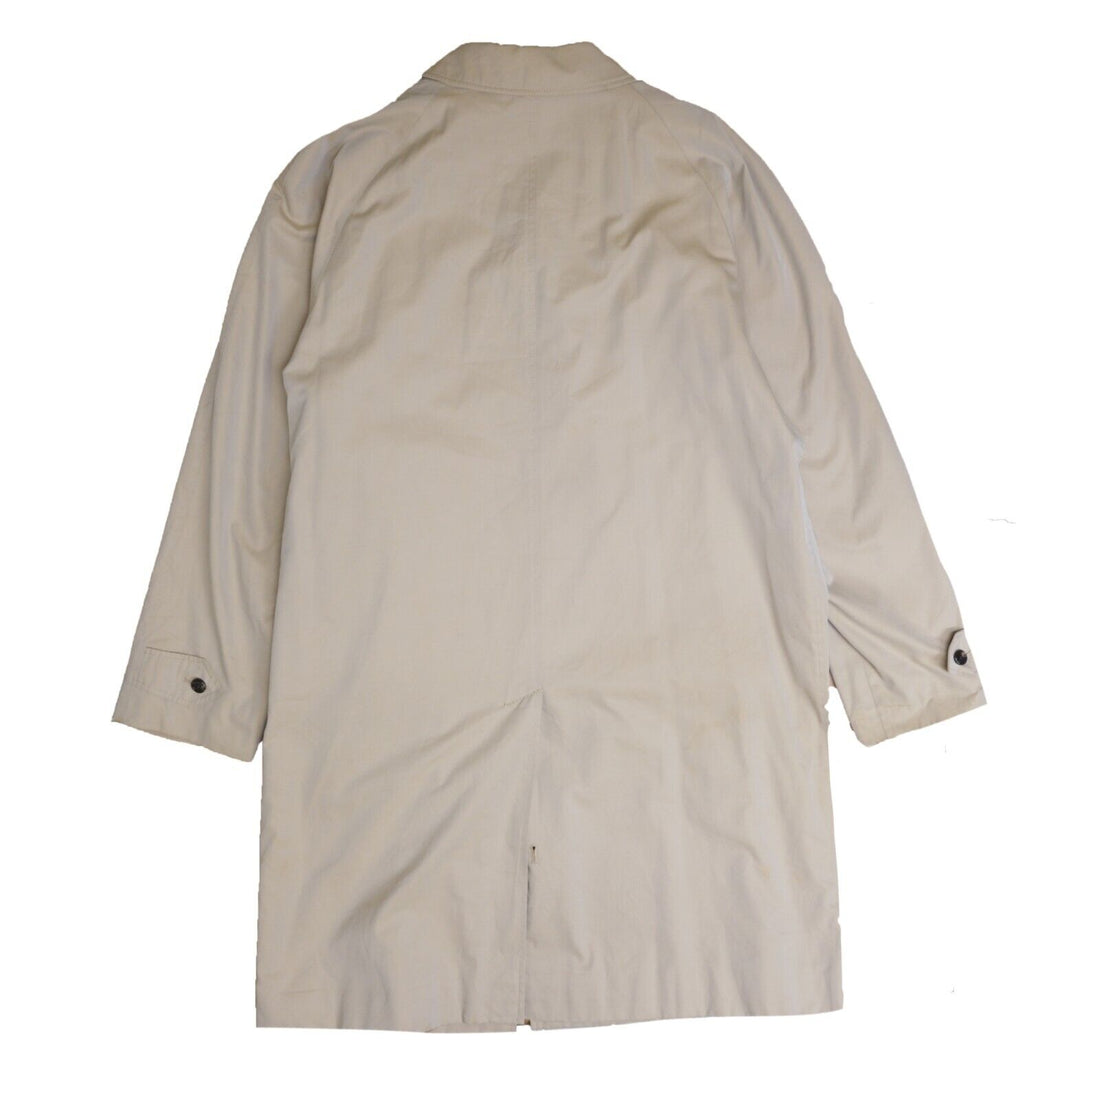 Burberry London Trench Coat Jacket Size Large Beige Nova Check Plaid